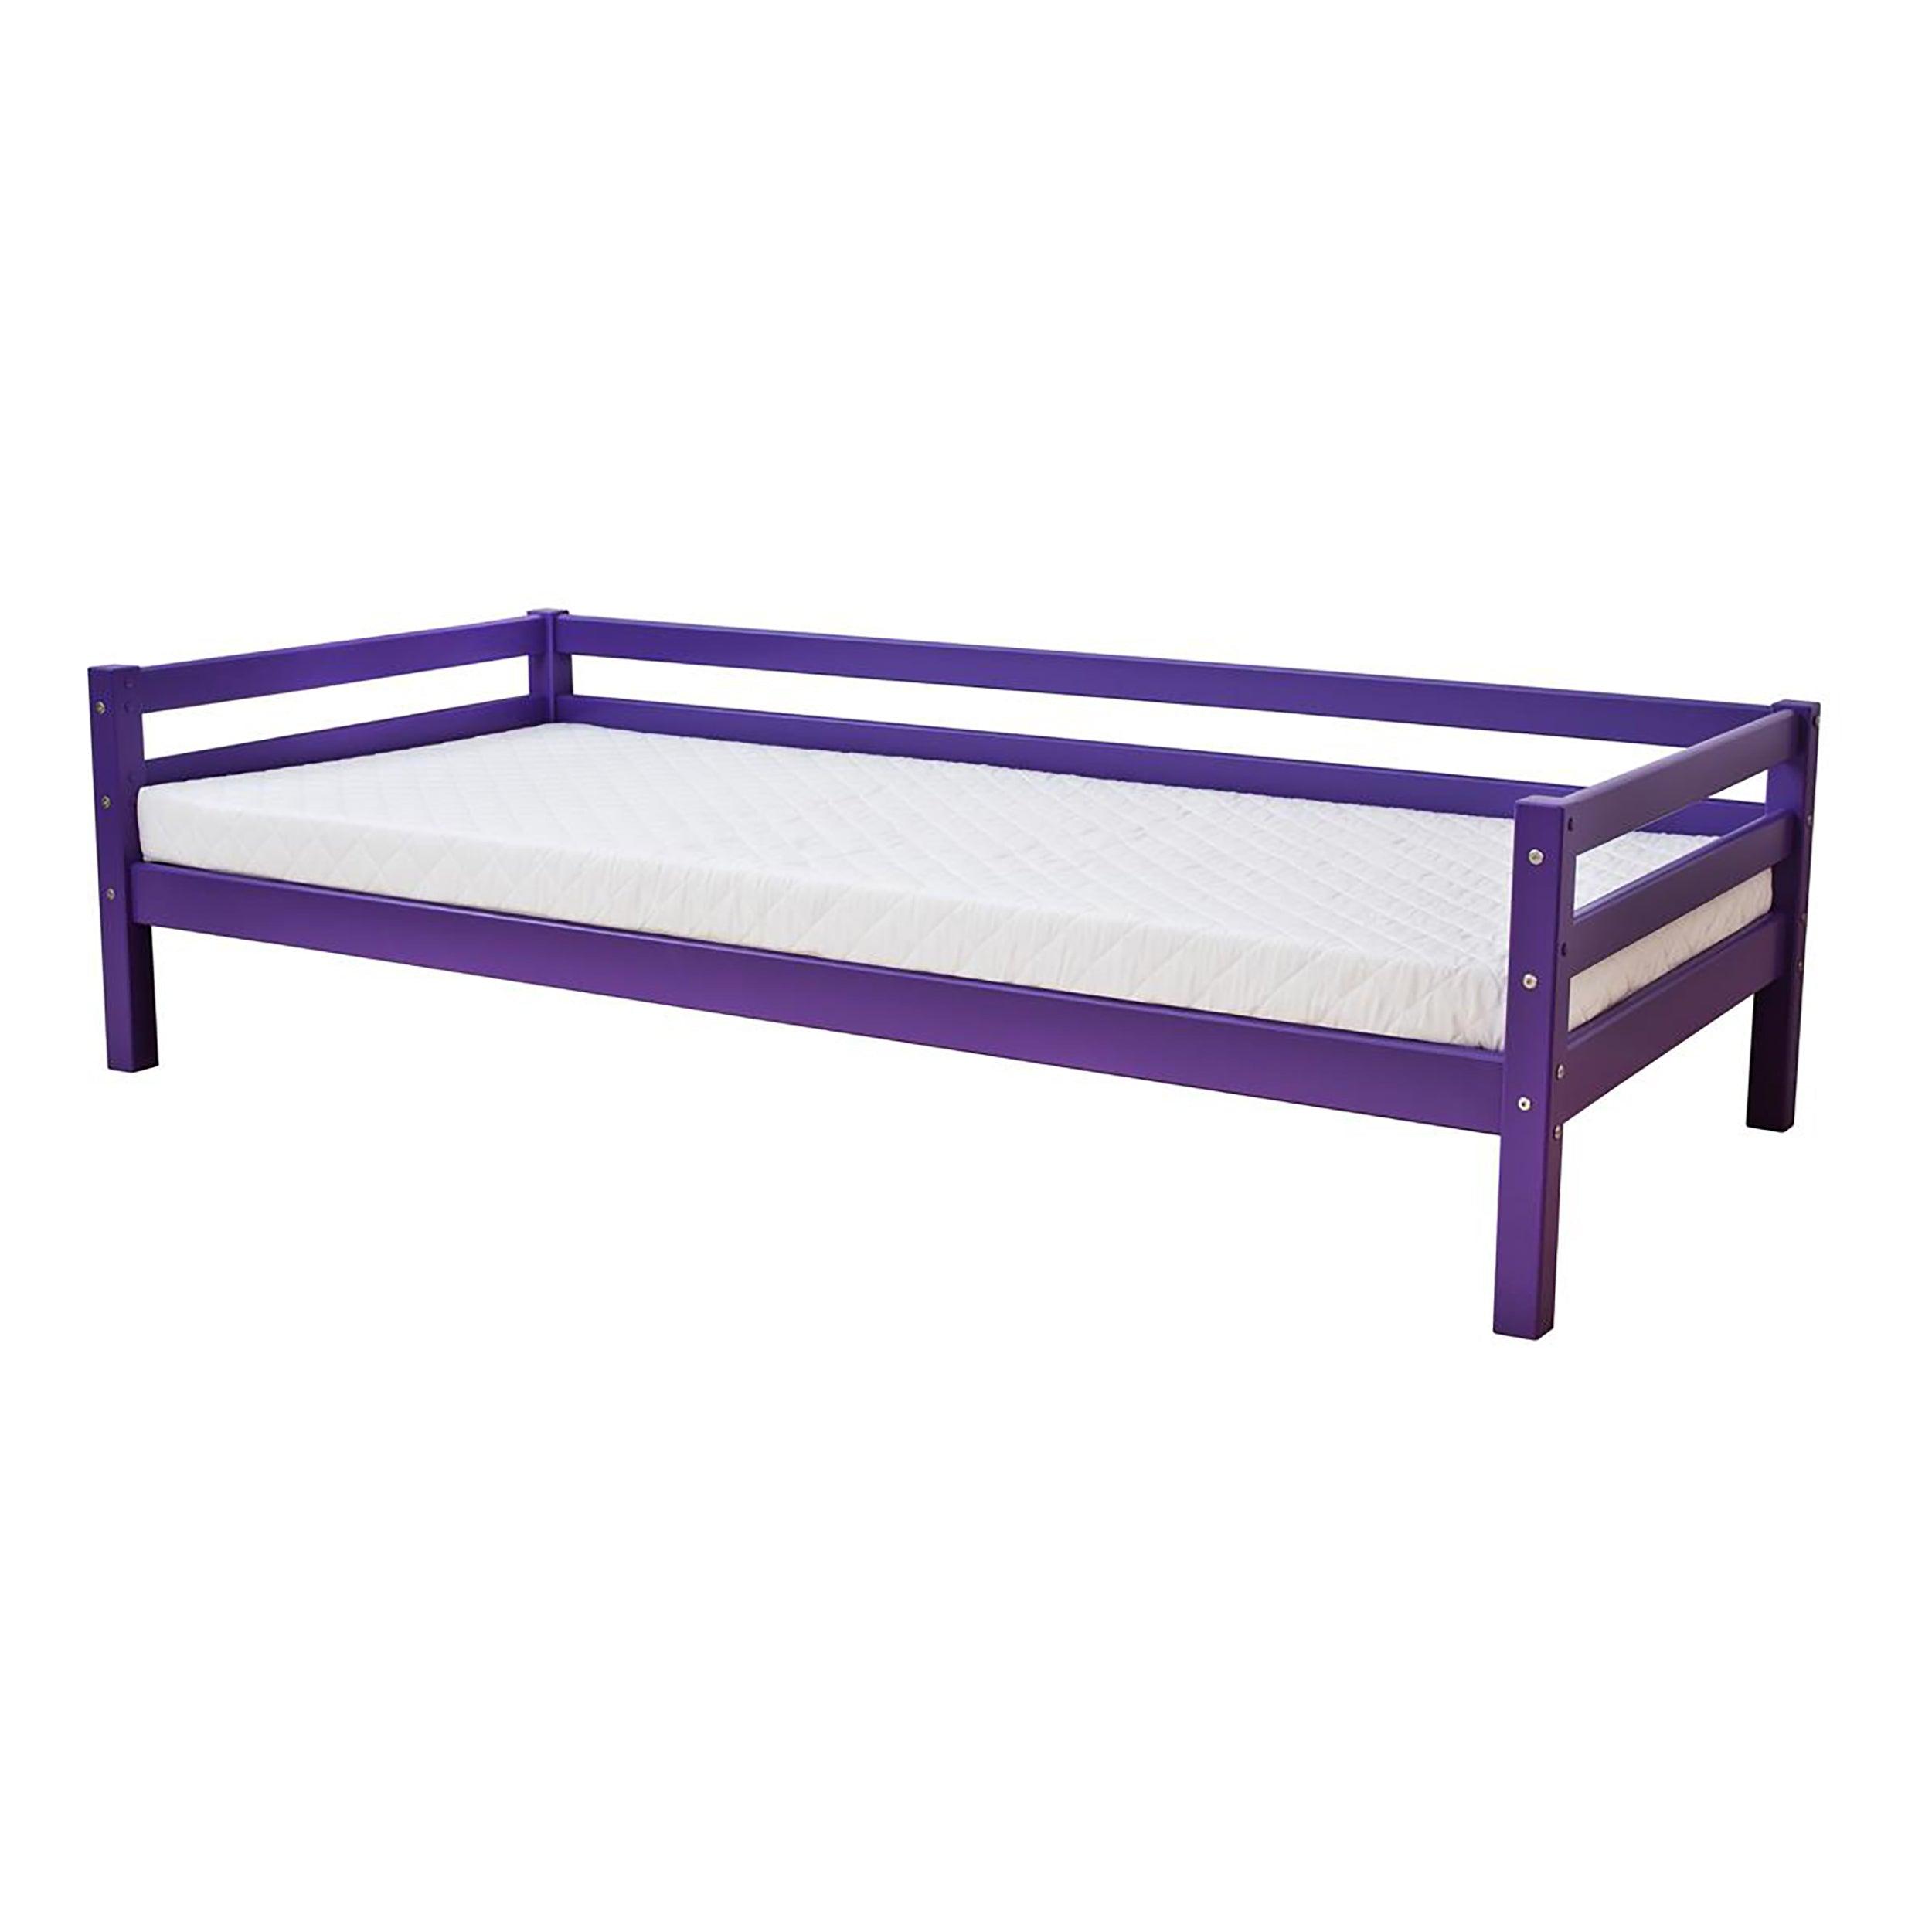 Outlet: ECO Dream Junior bed, Purple